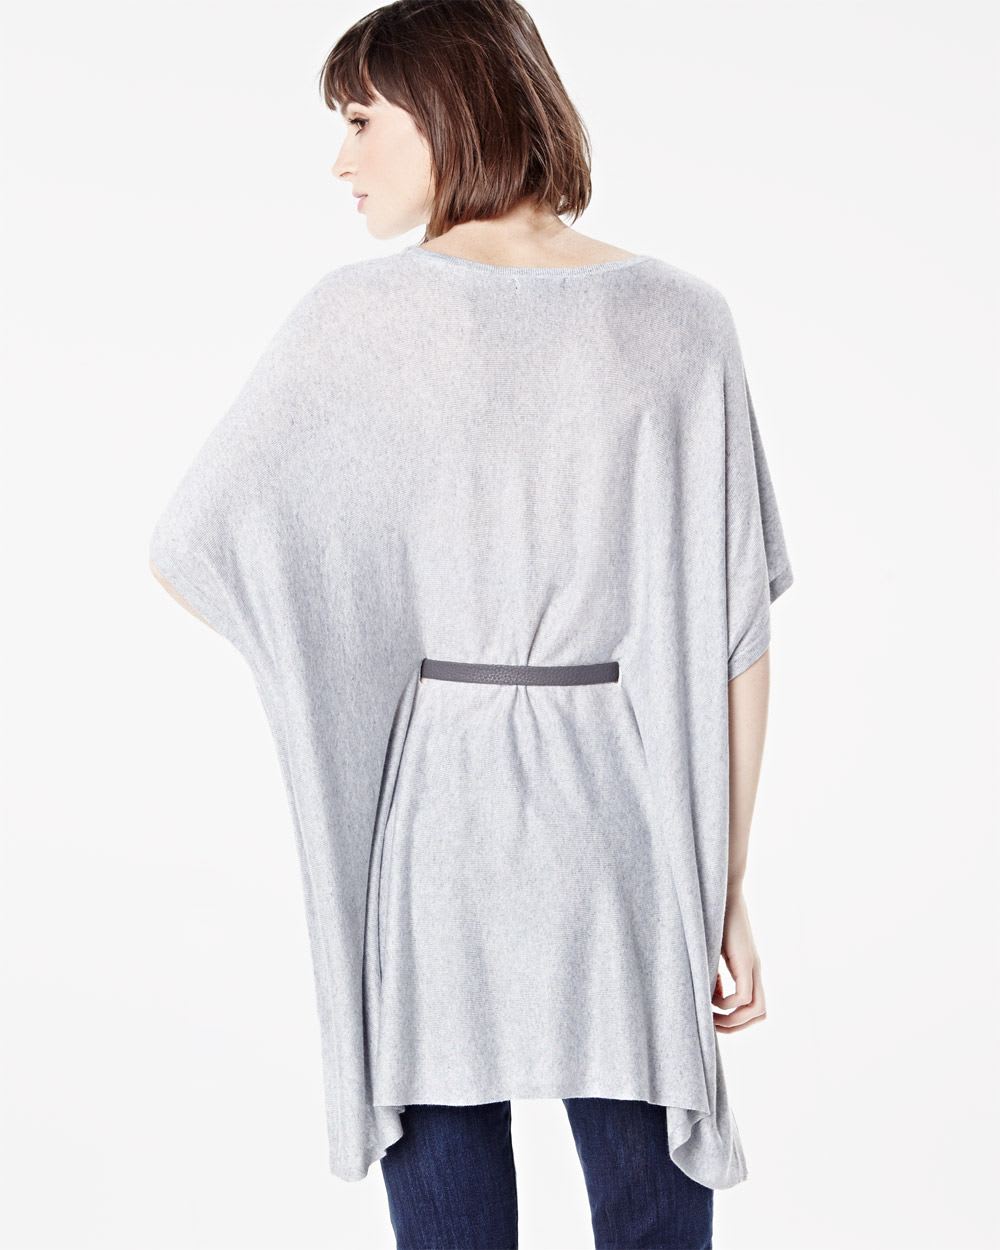 Lightweight cape sweater with belt | RW&CO.